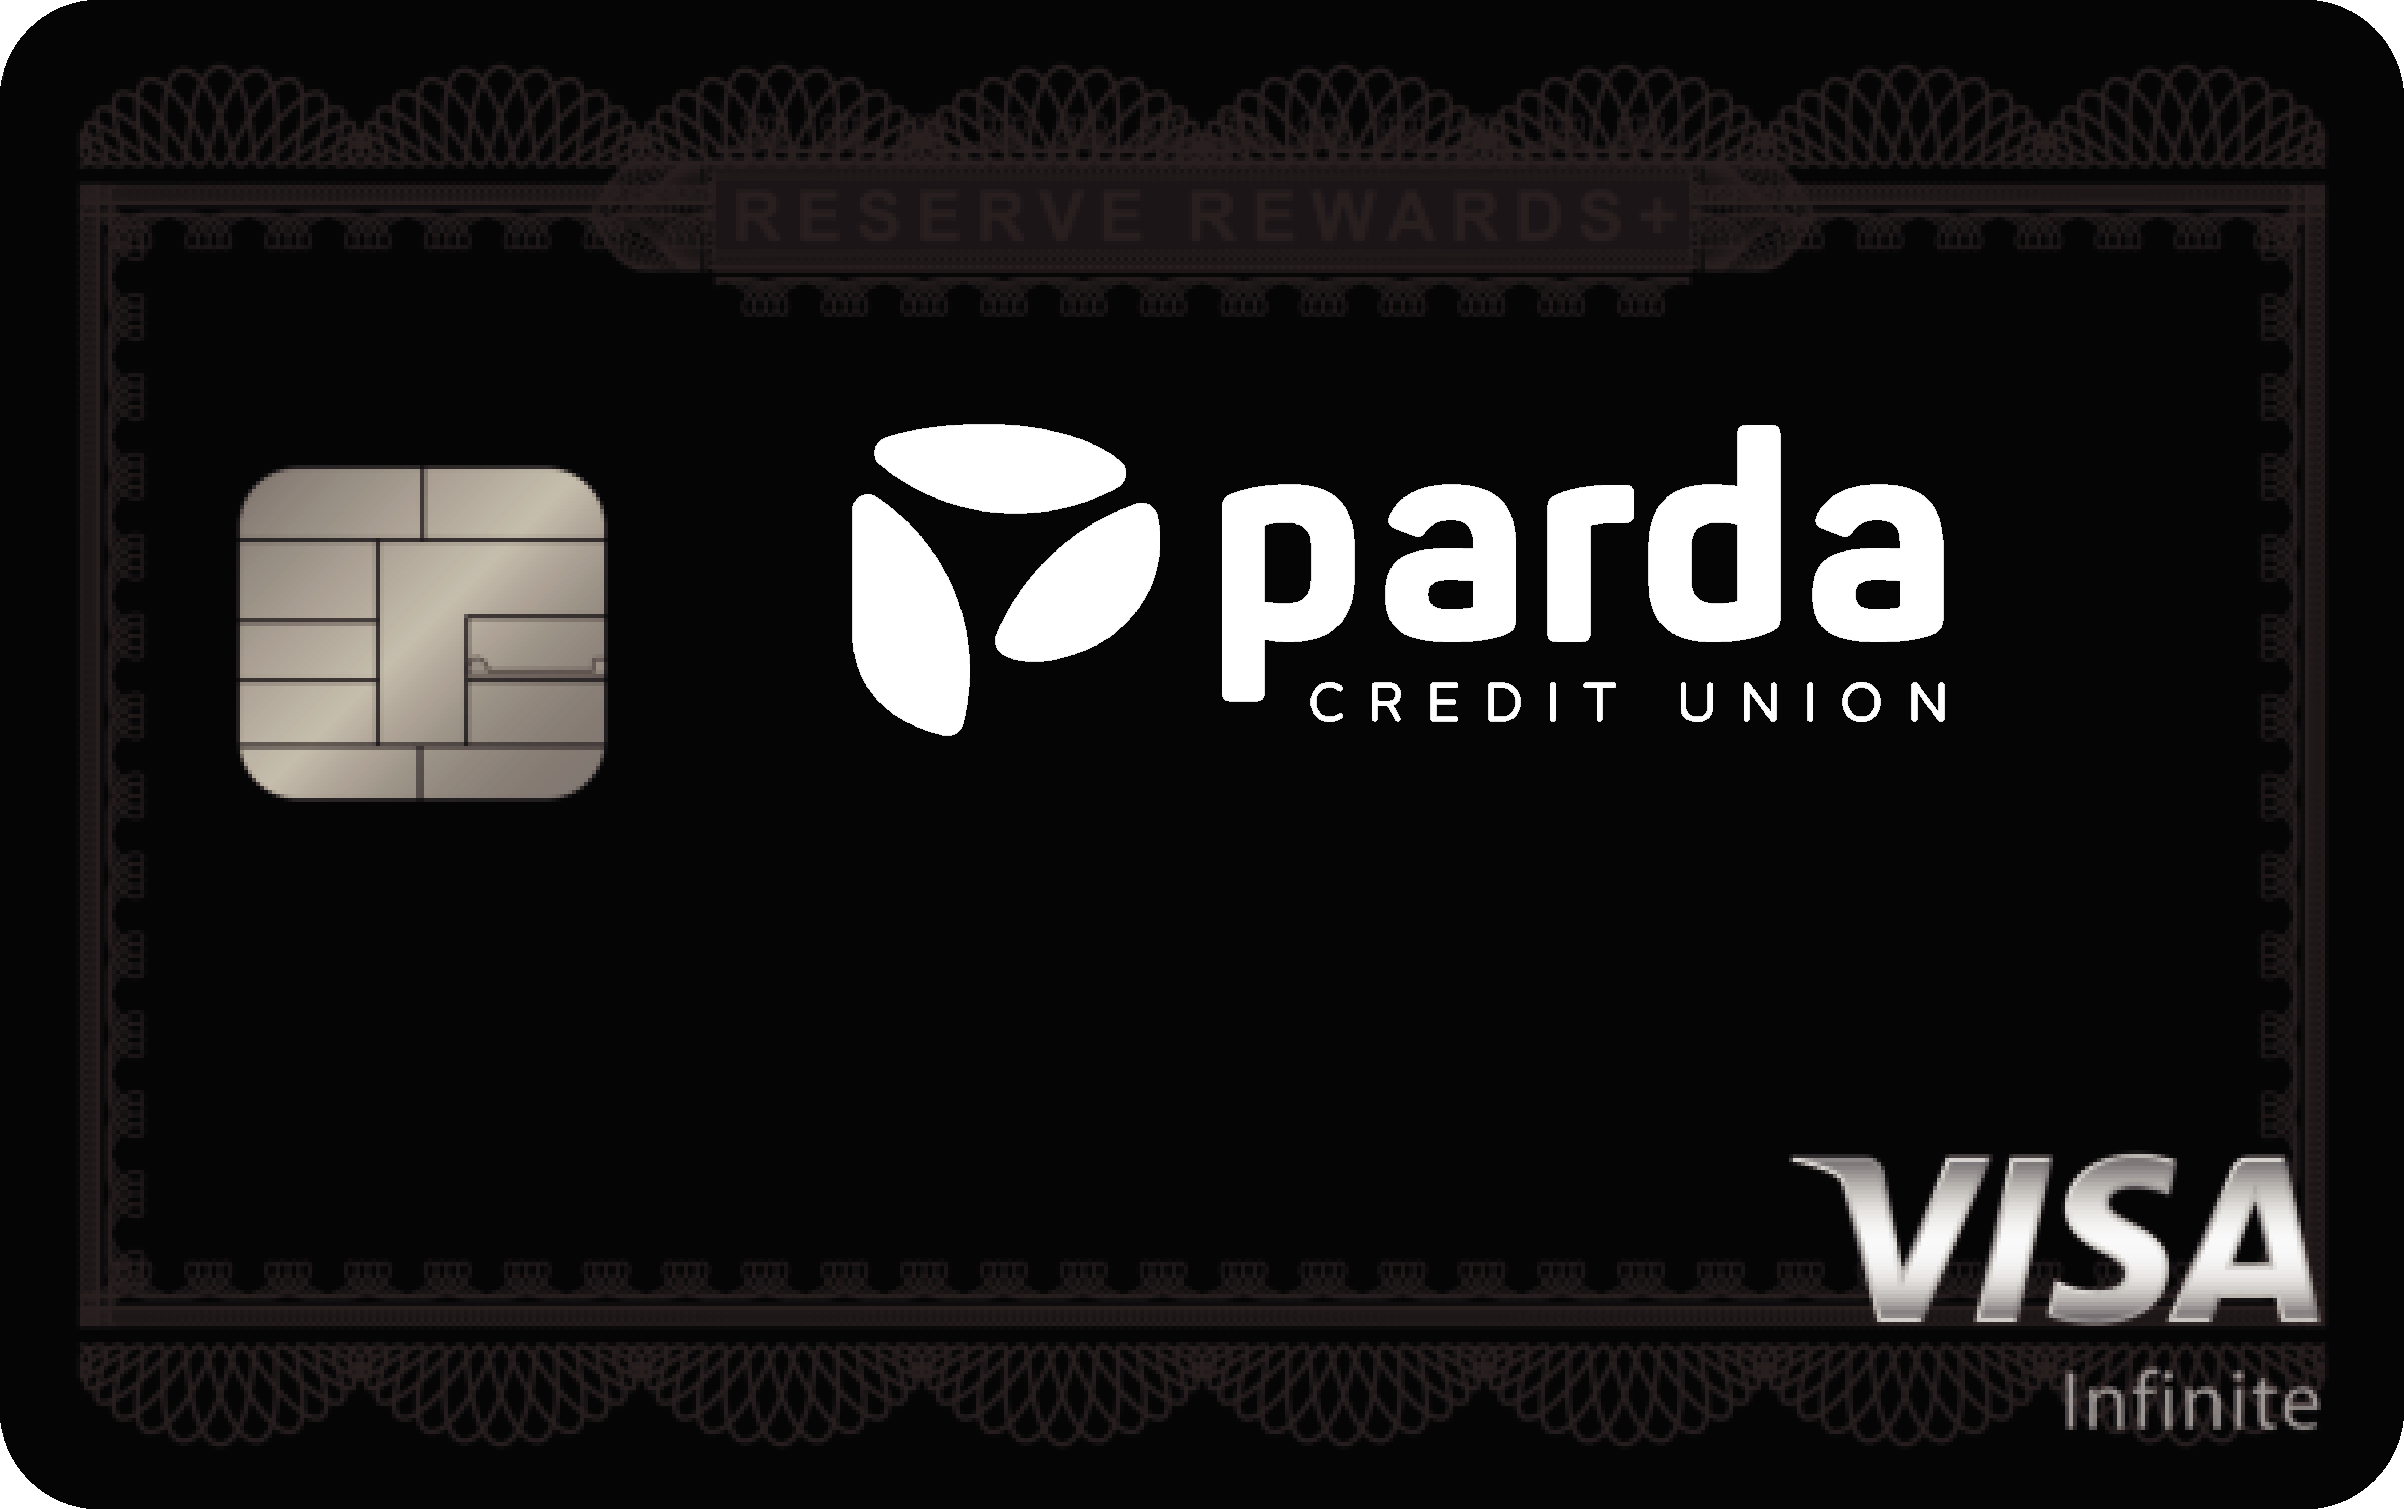 Parda Credit Union